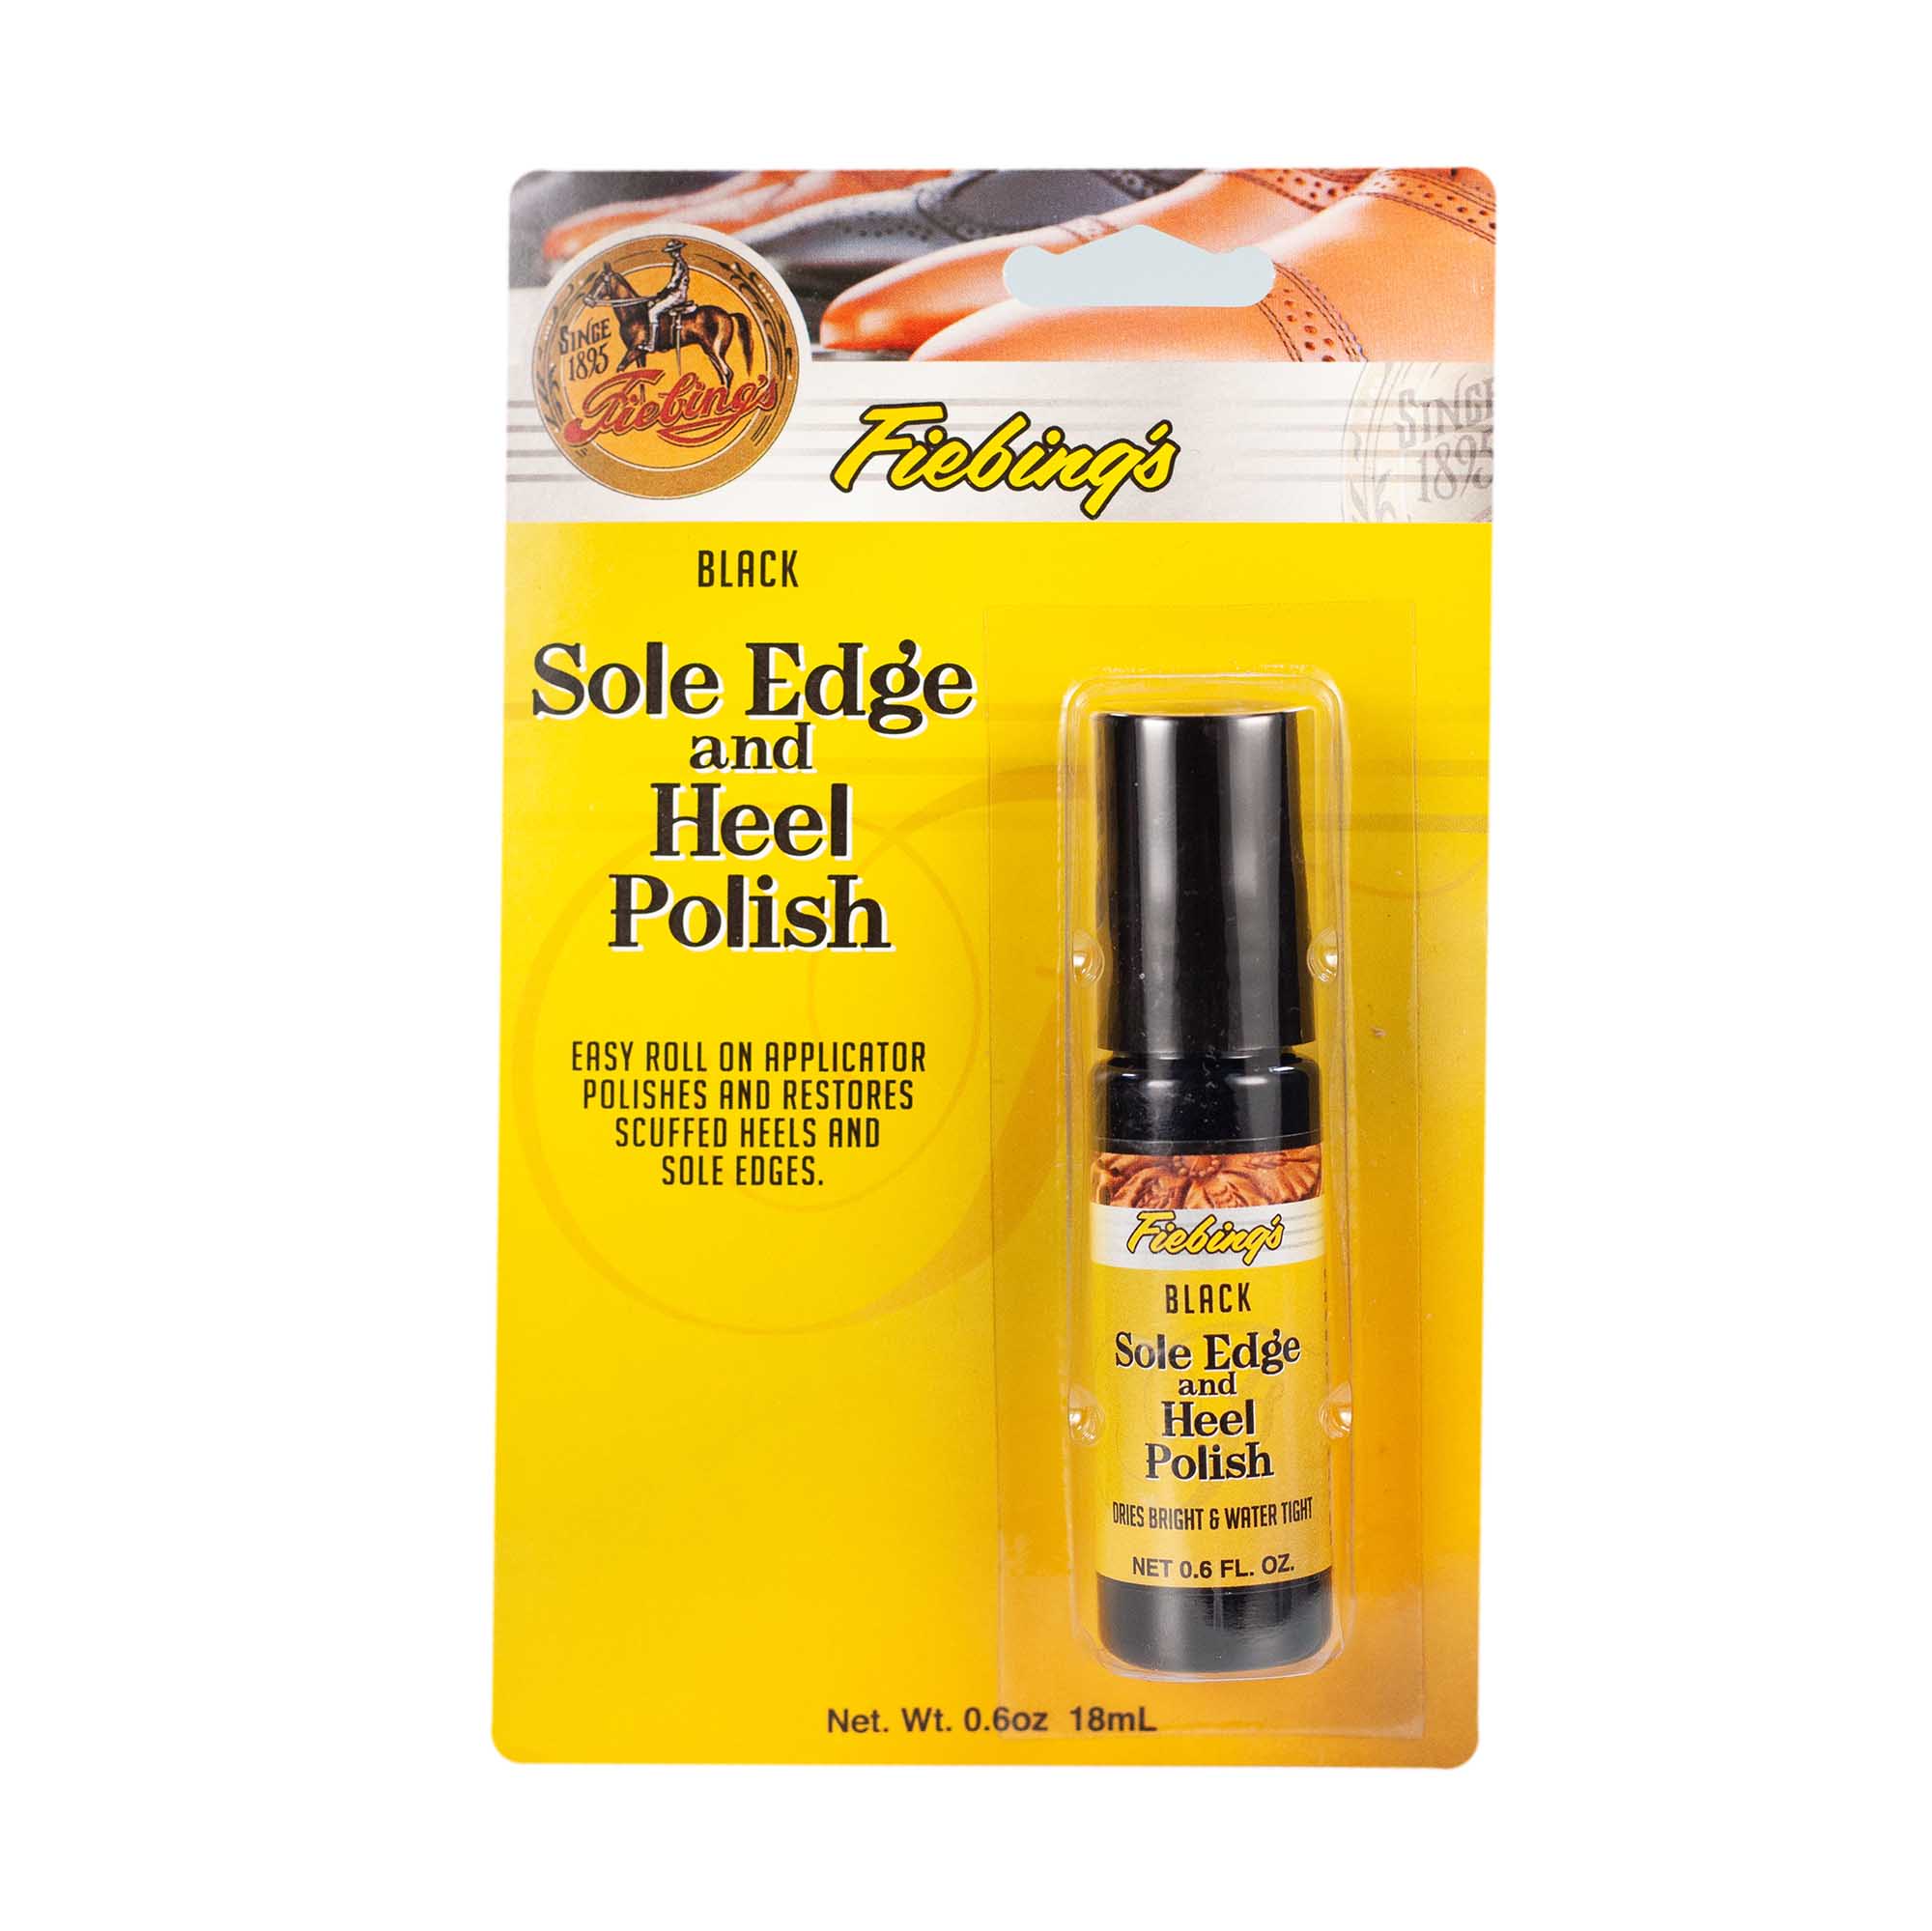 Sole Edge and Heel Polish – Fiebing's